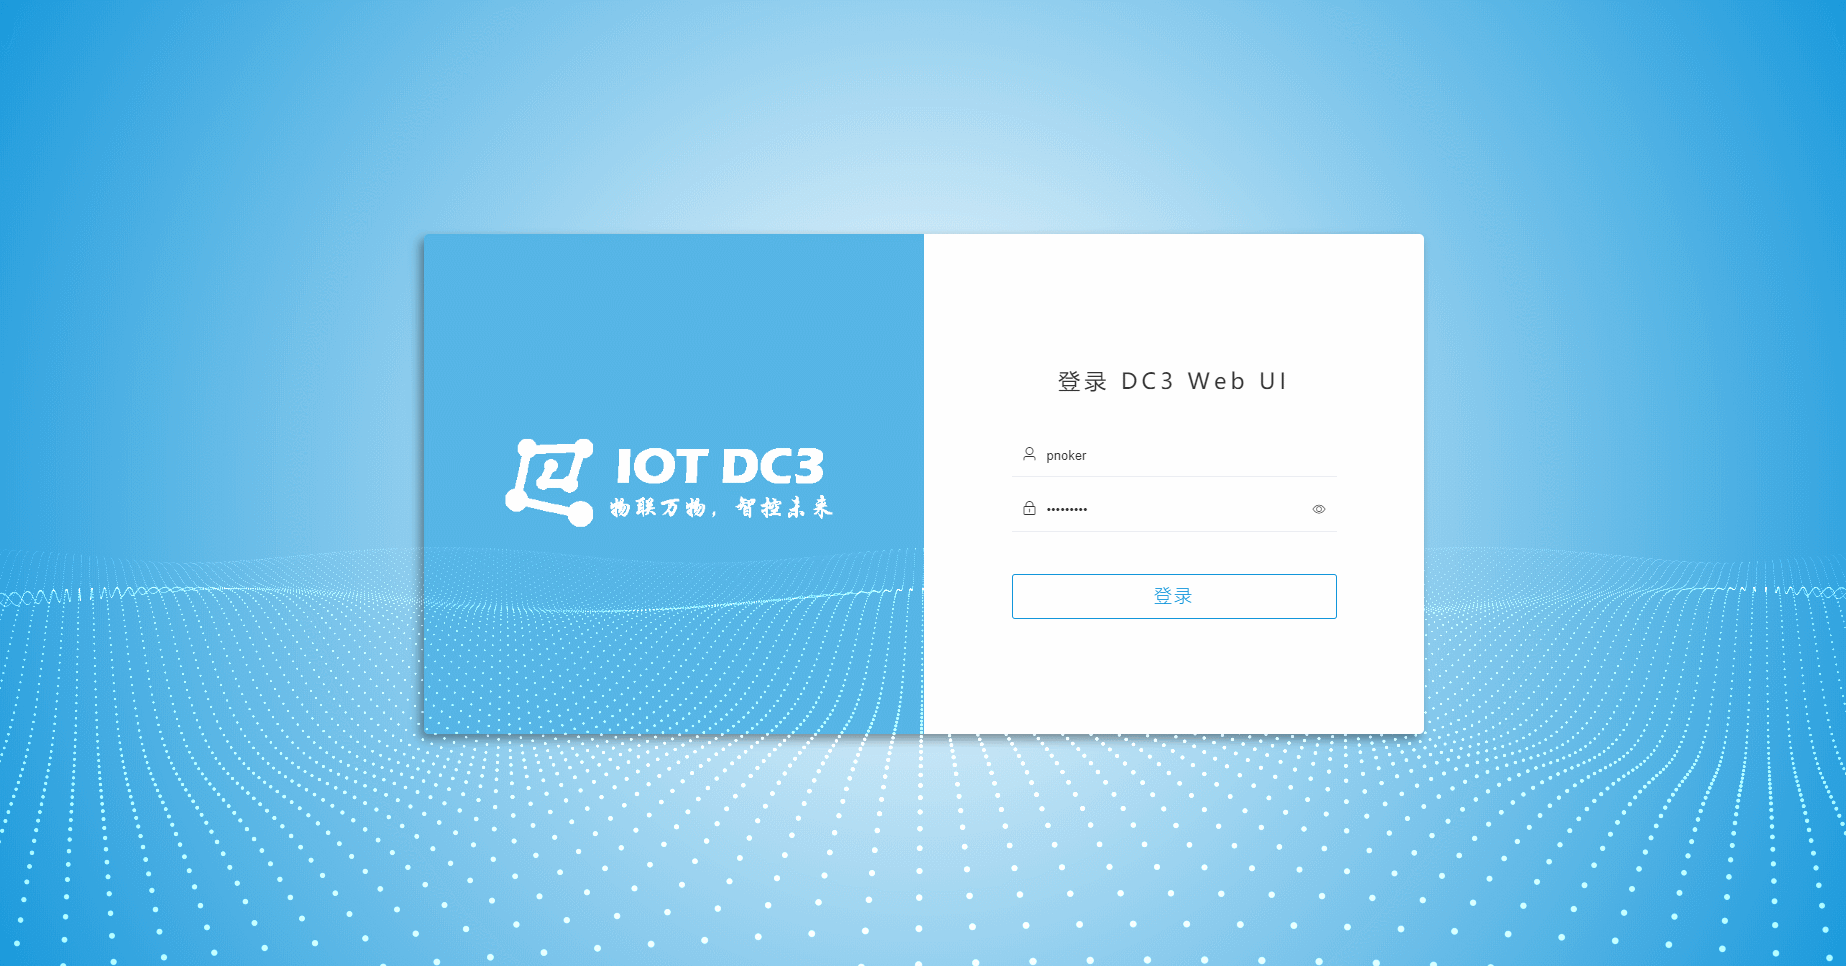 iot-dc3-web-login